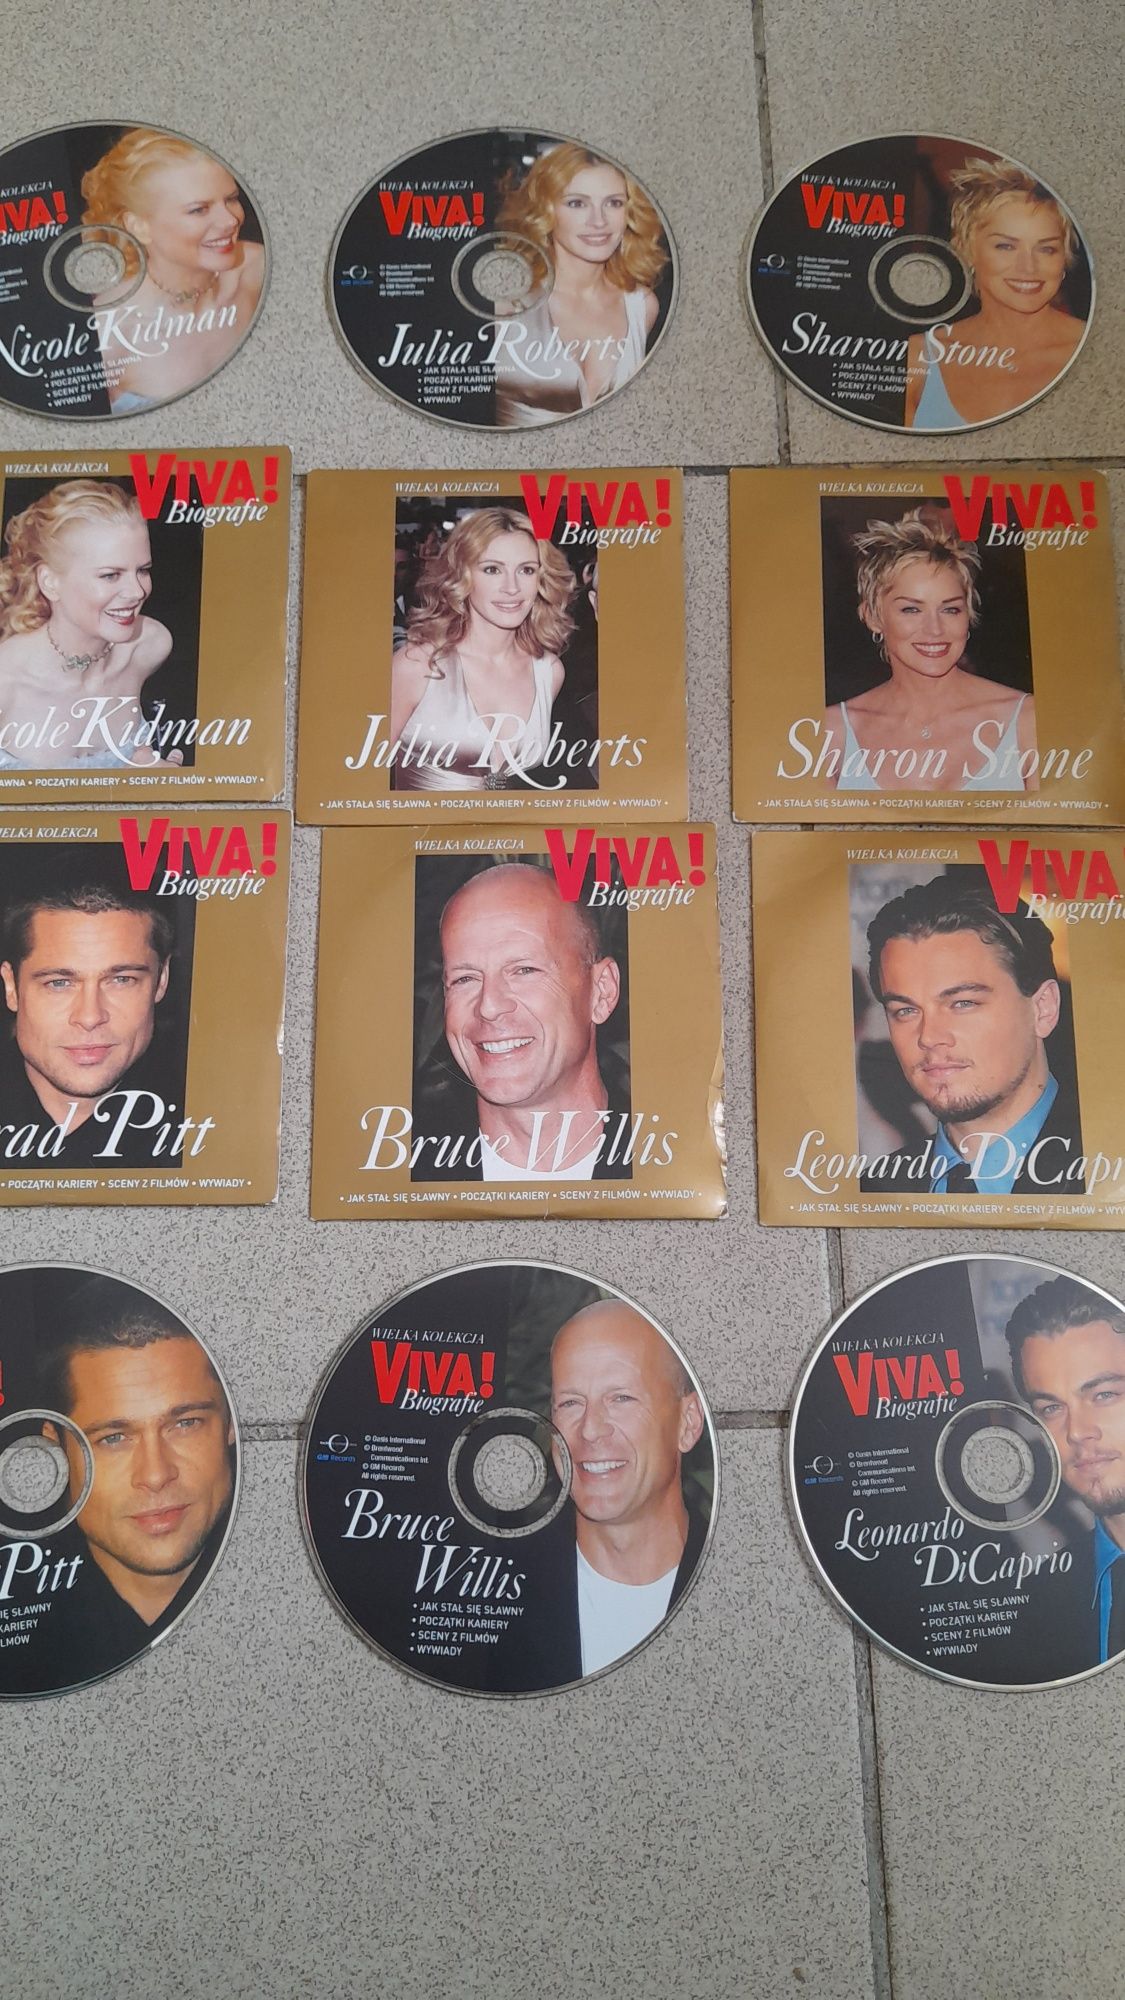 Wielka kolekcja VIVA ! Biografie. Nicole Kidman VCD. itp .